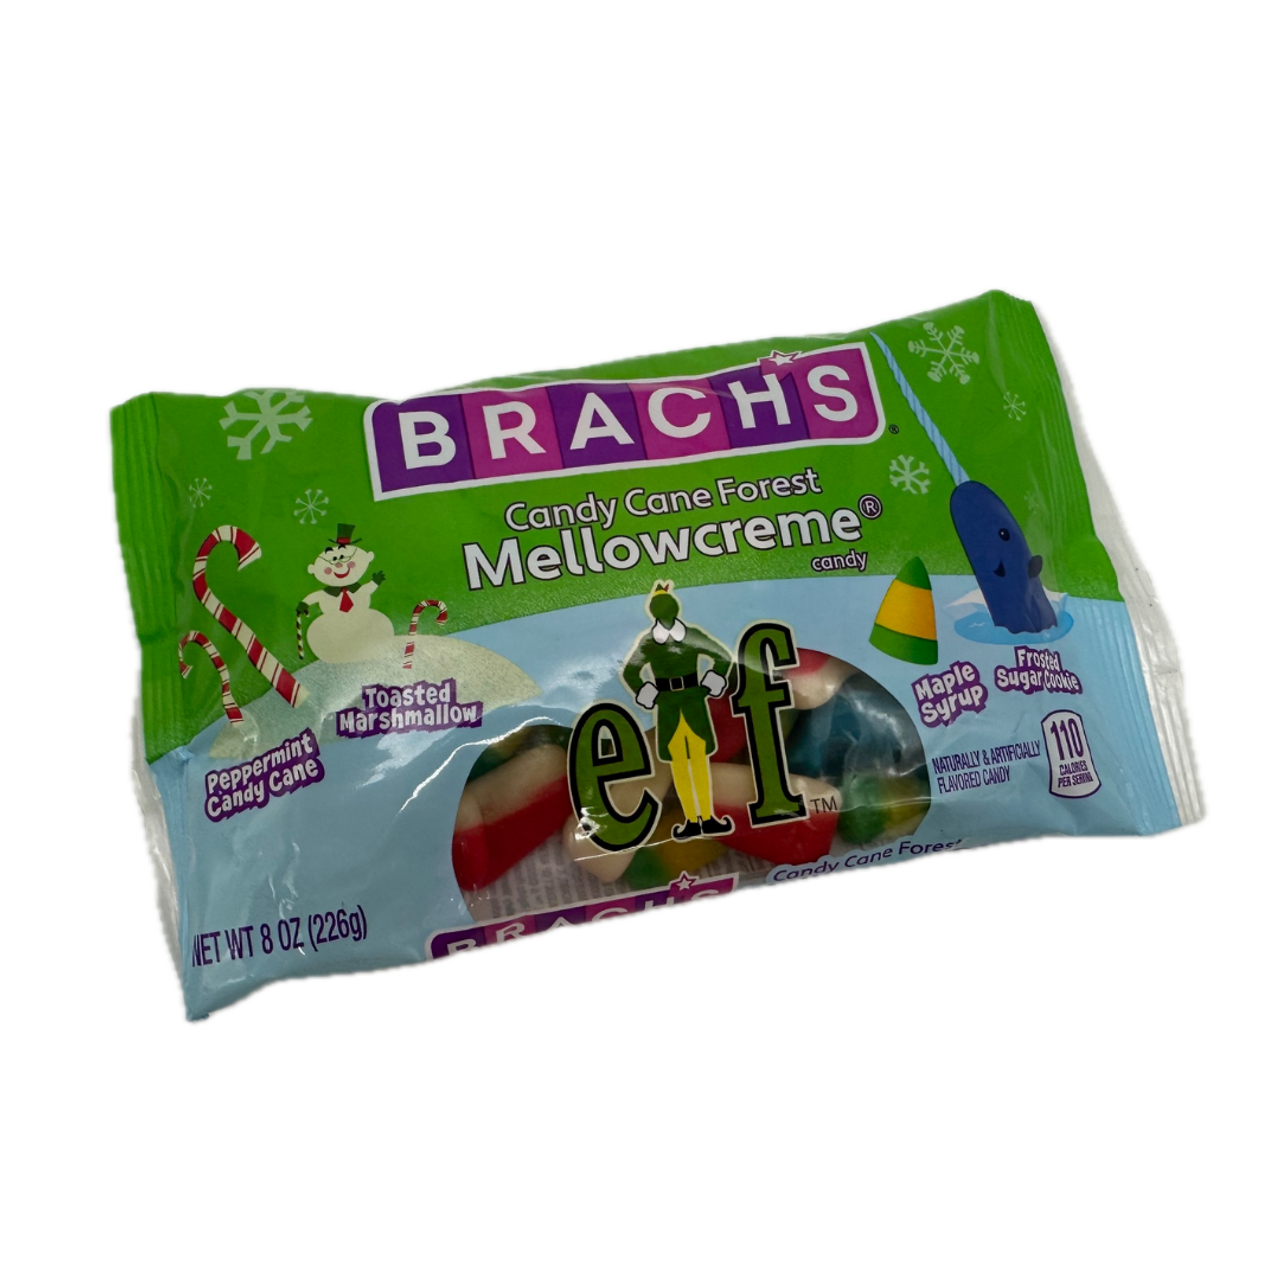 Brach's Elf Candy Canes, Mellowcreme, Gum Drops, Pepperidge Farm